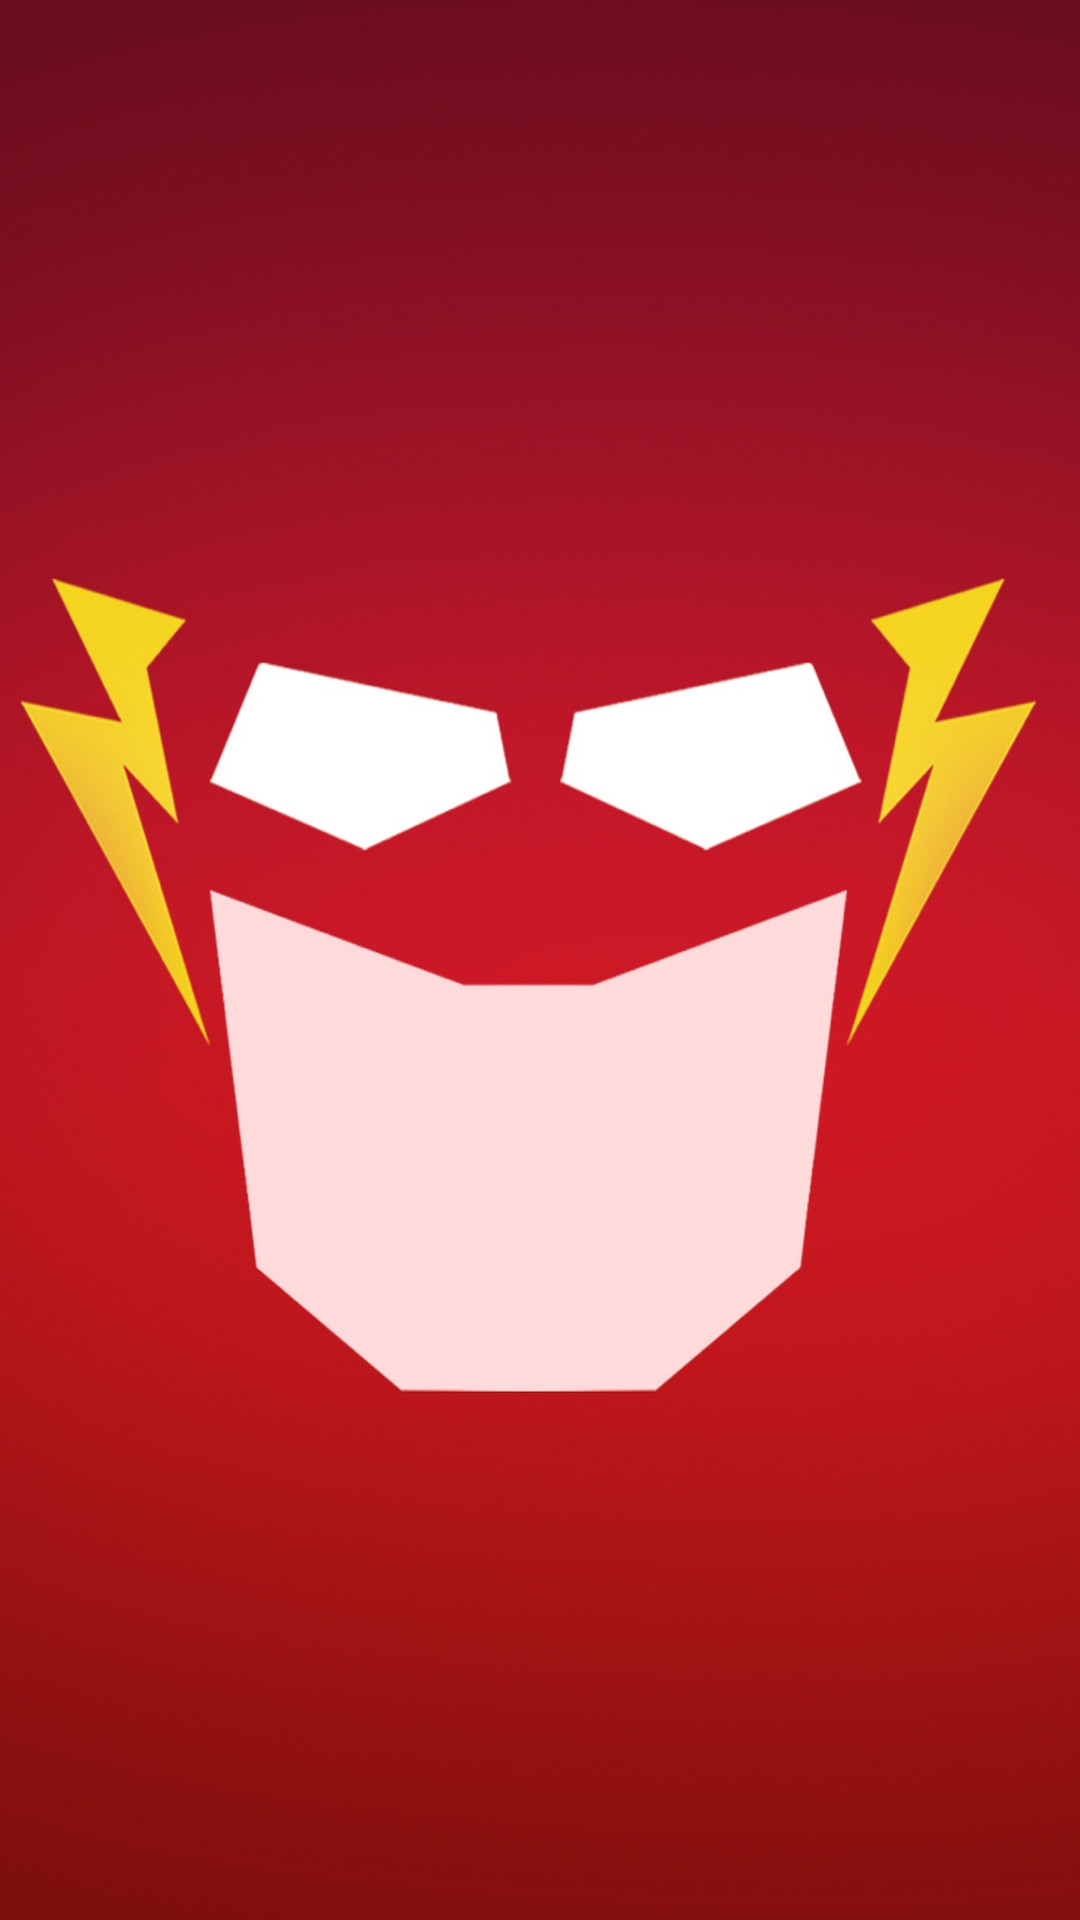 1080x1920 Wallpaper Weekends: The Flash Returns!